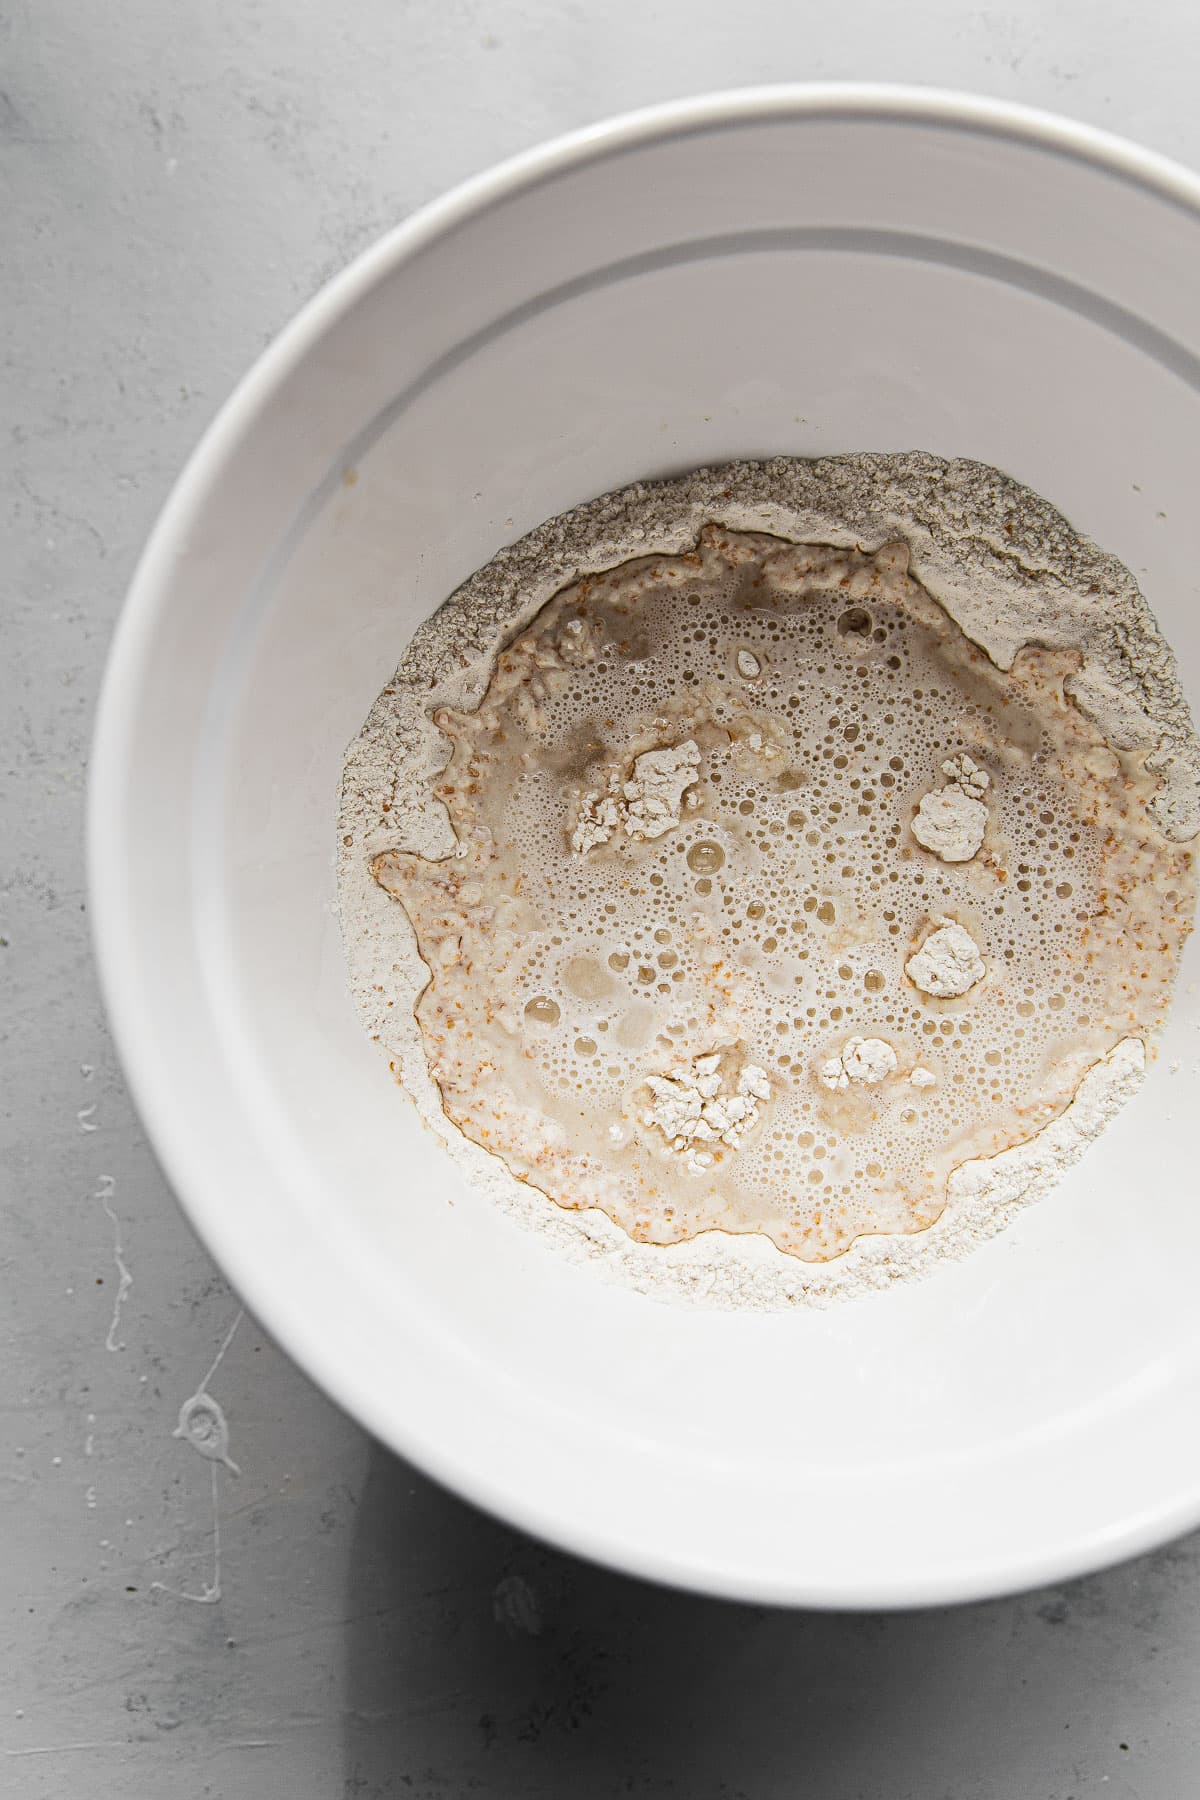 Artisan Sourdough Bread Recipe (with Video!) - A Beautiful Plate